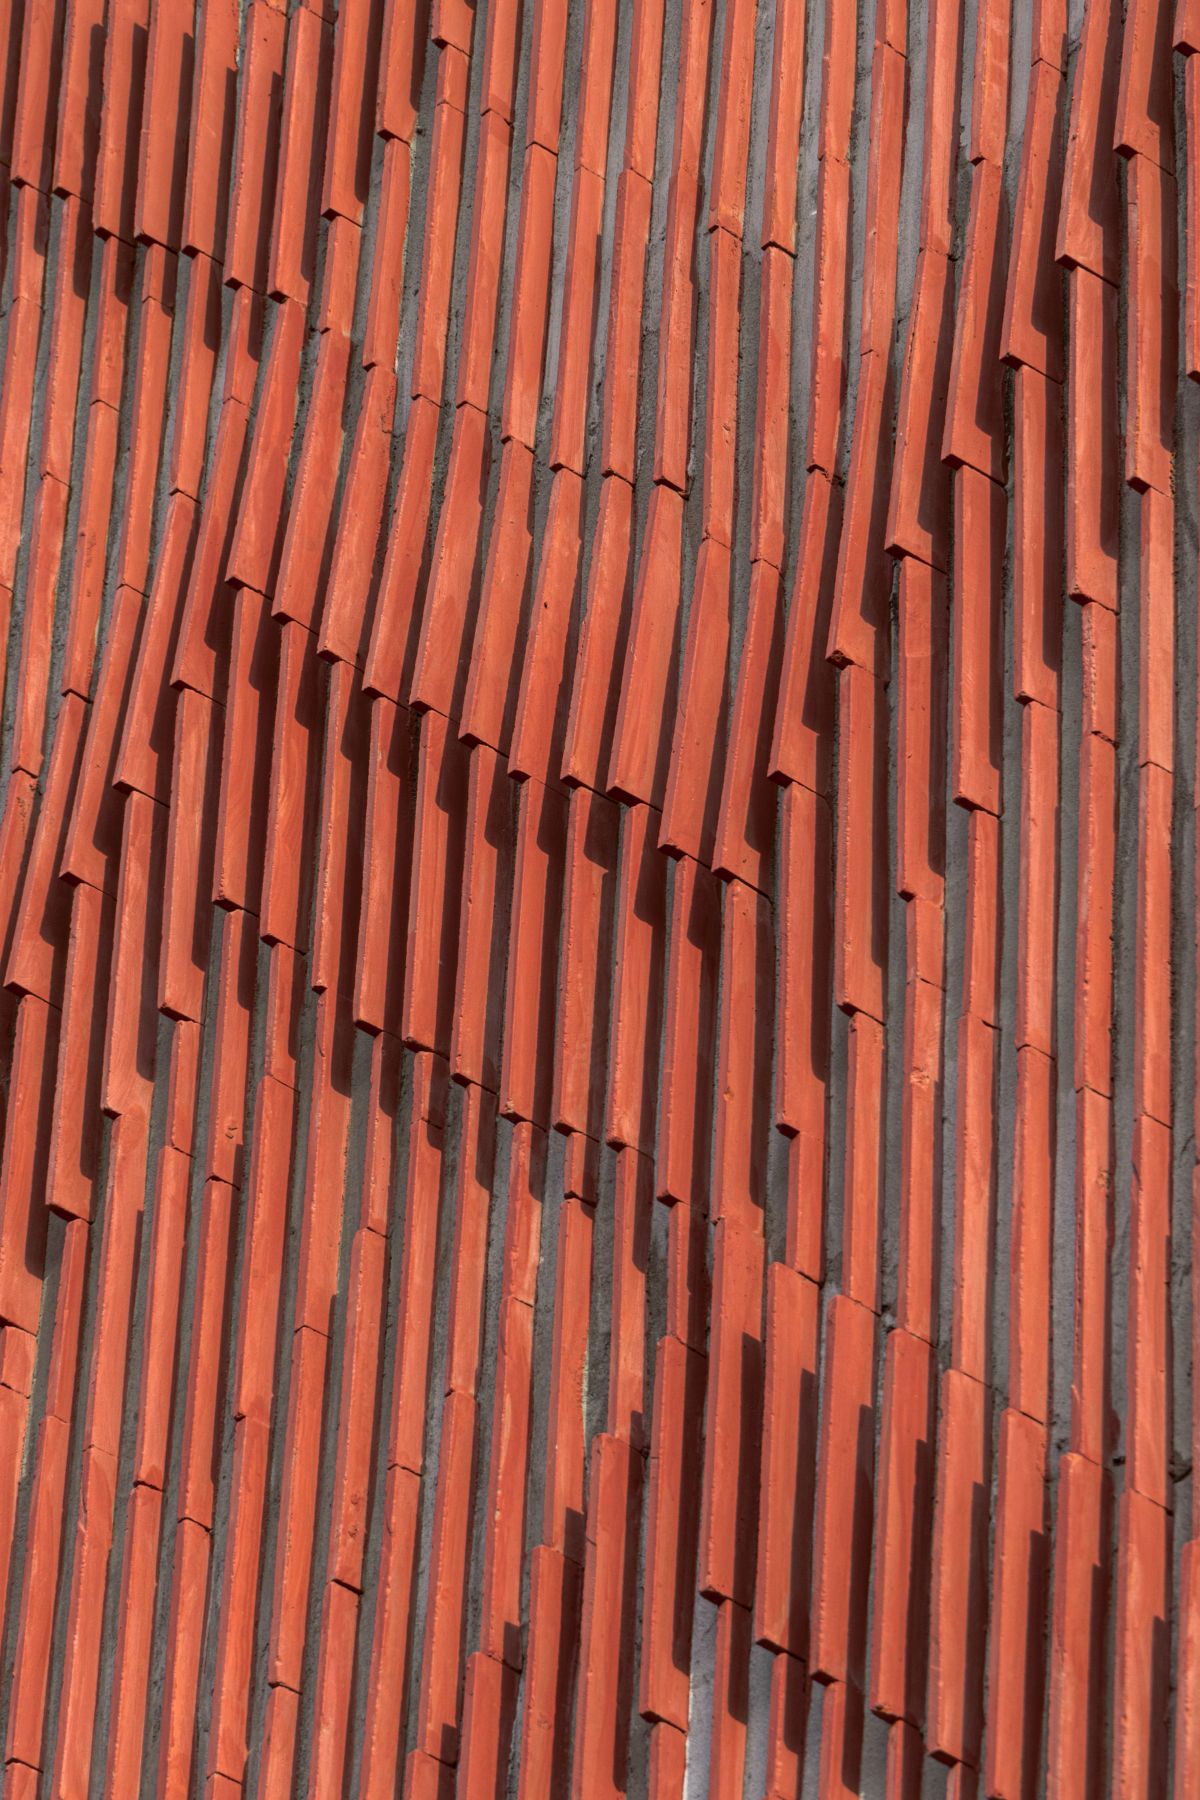 Clay roof tiles façade to minimize heat gain and has decorative function, at Vadodara, by Manoj Patel Design Studio 63